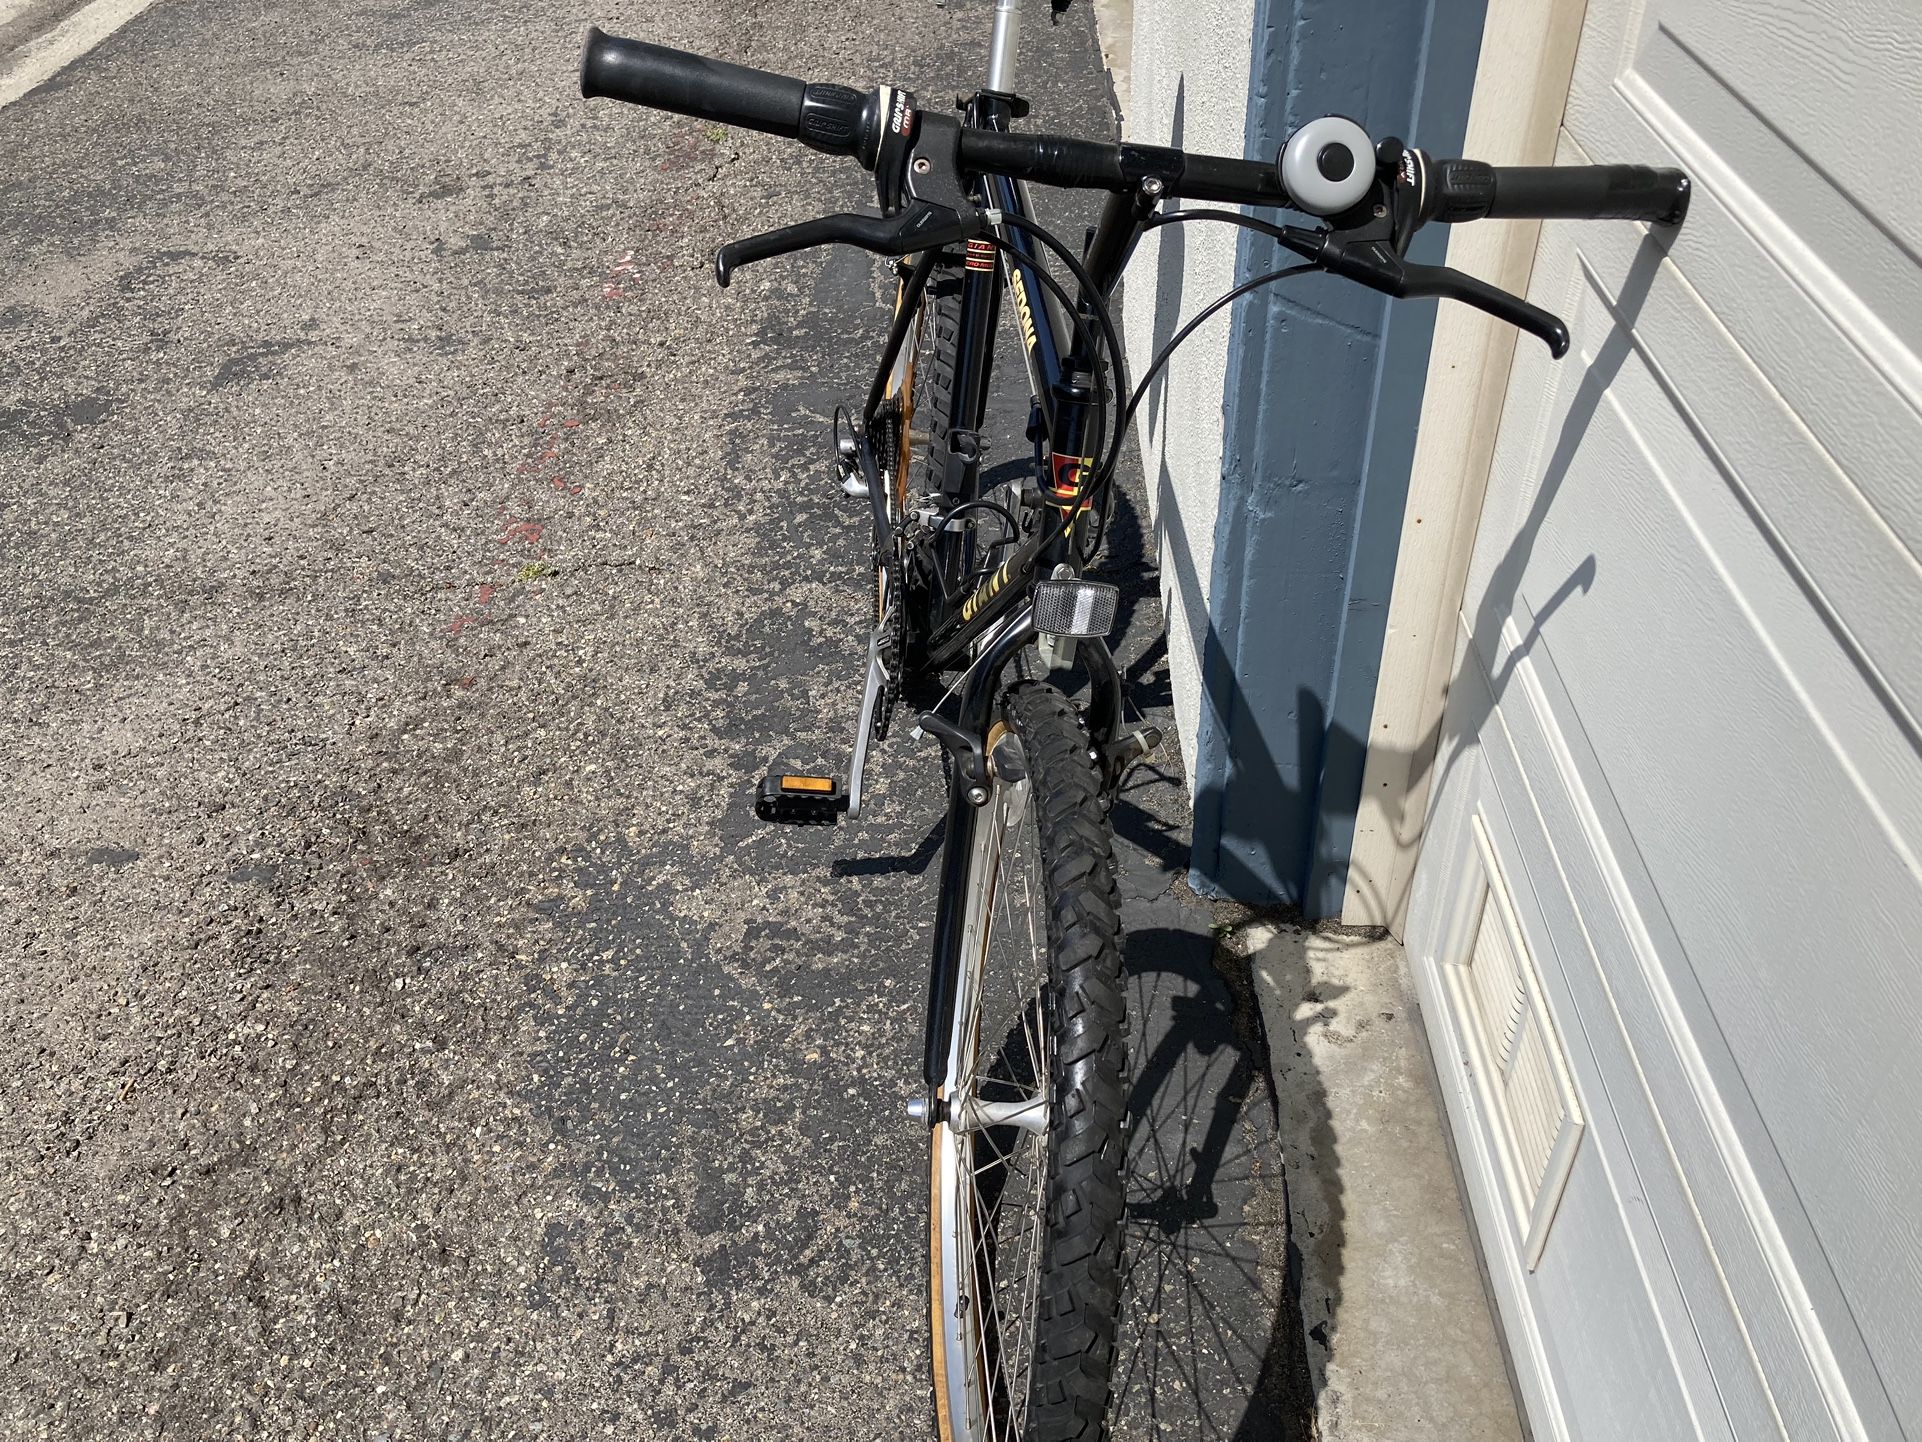 Sedona Giant Bike